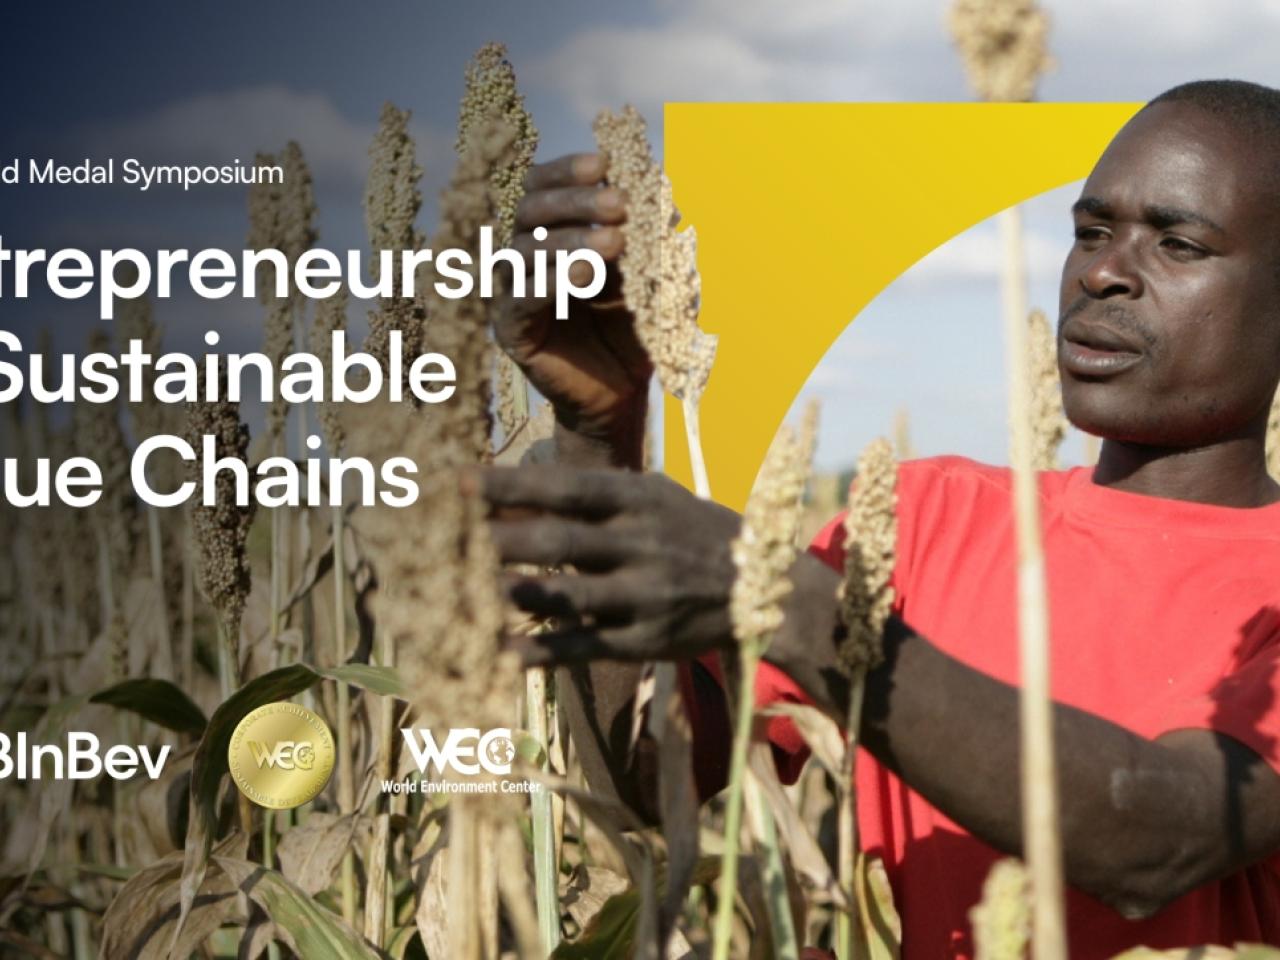 "Entrepreneurship in Sustainable Value Chains"